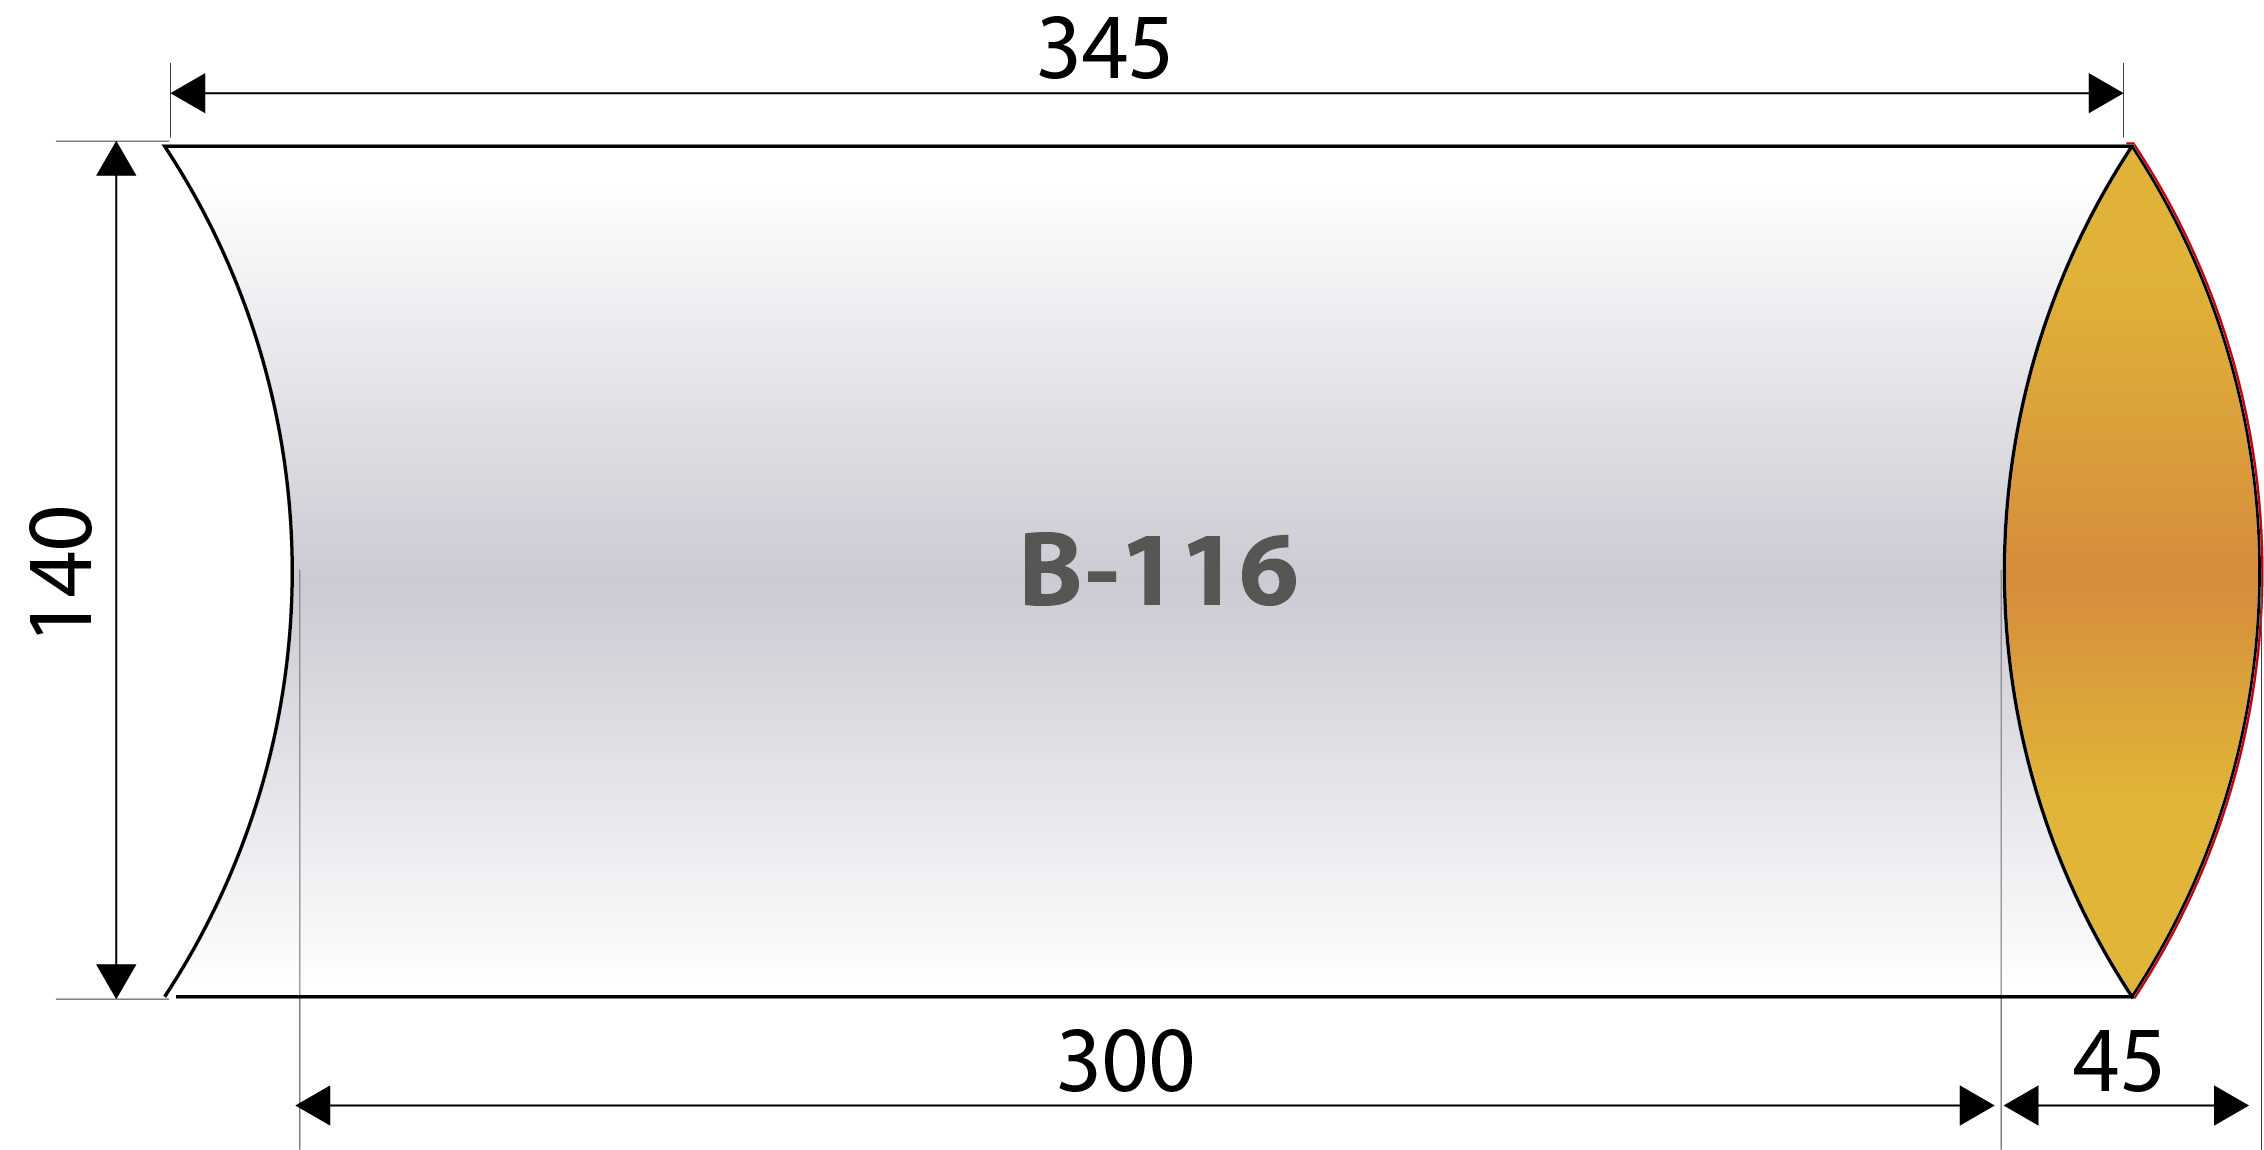 Схема с размерами упаковки пирожка арт. B-116 в мм